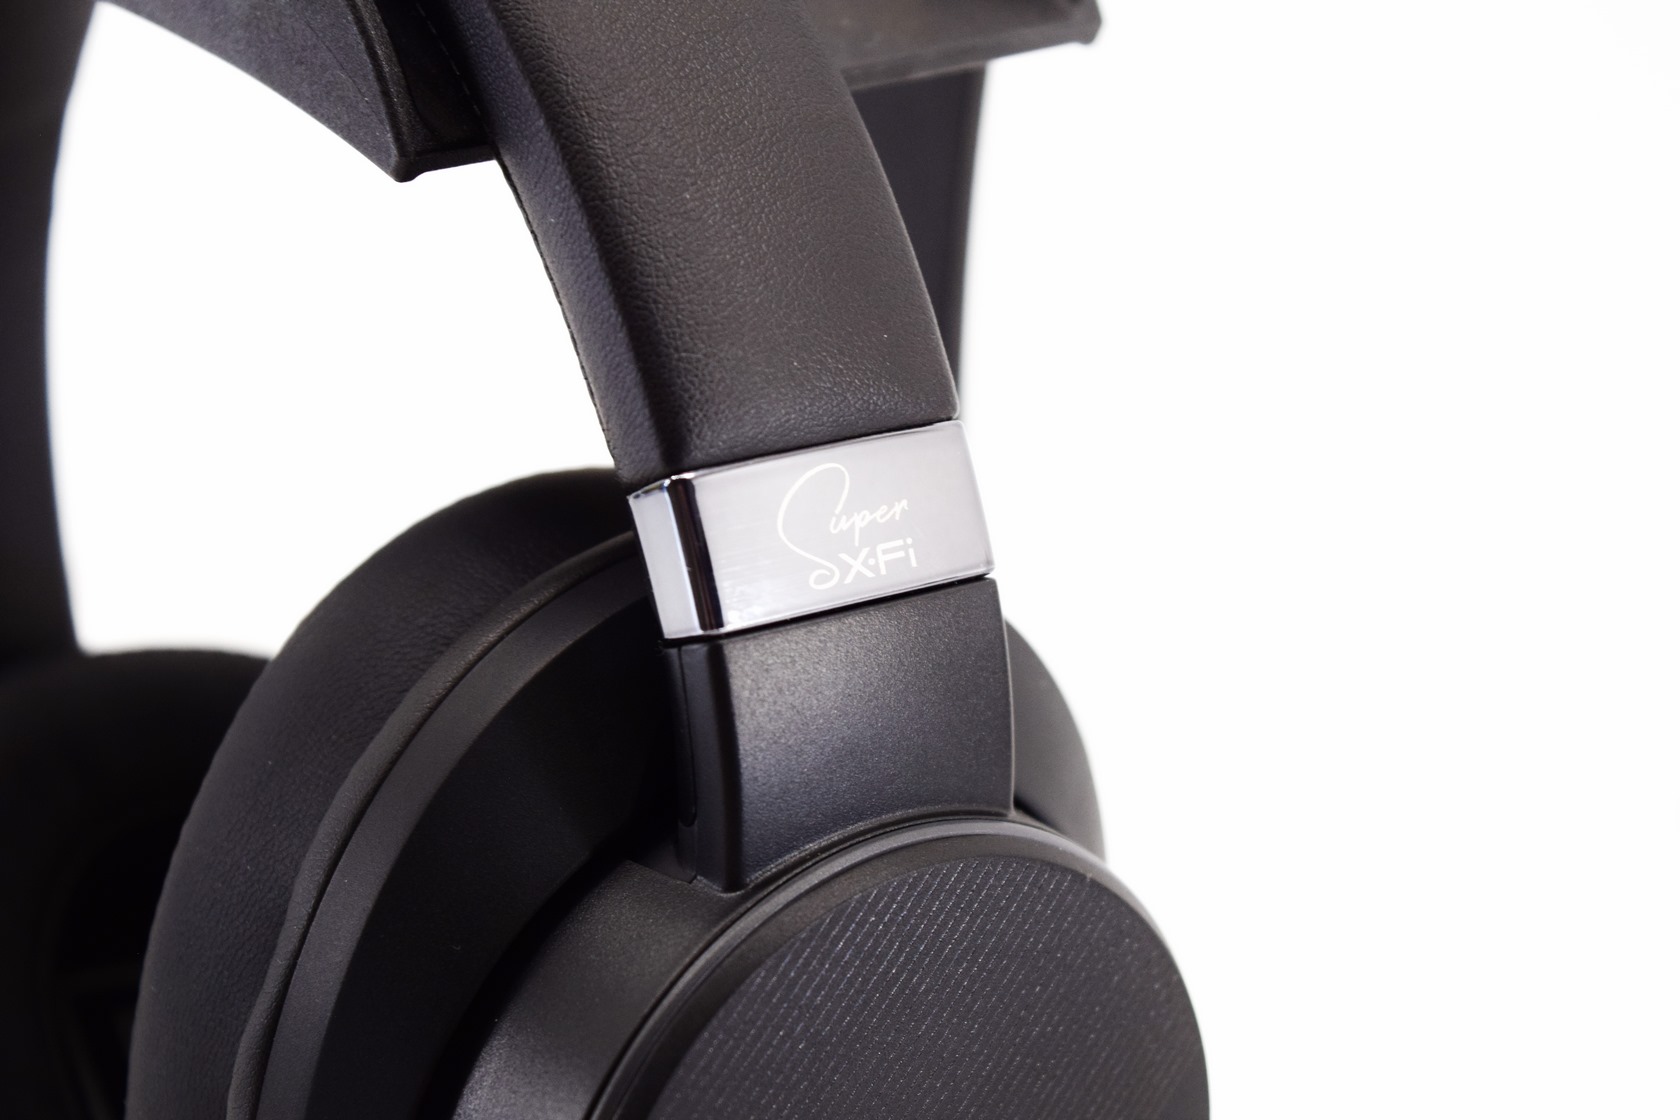 Creative SXFI Theater Super X-Fi Low-Latency Wireless Headphones Review